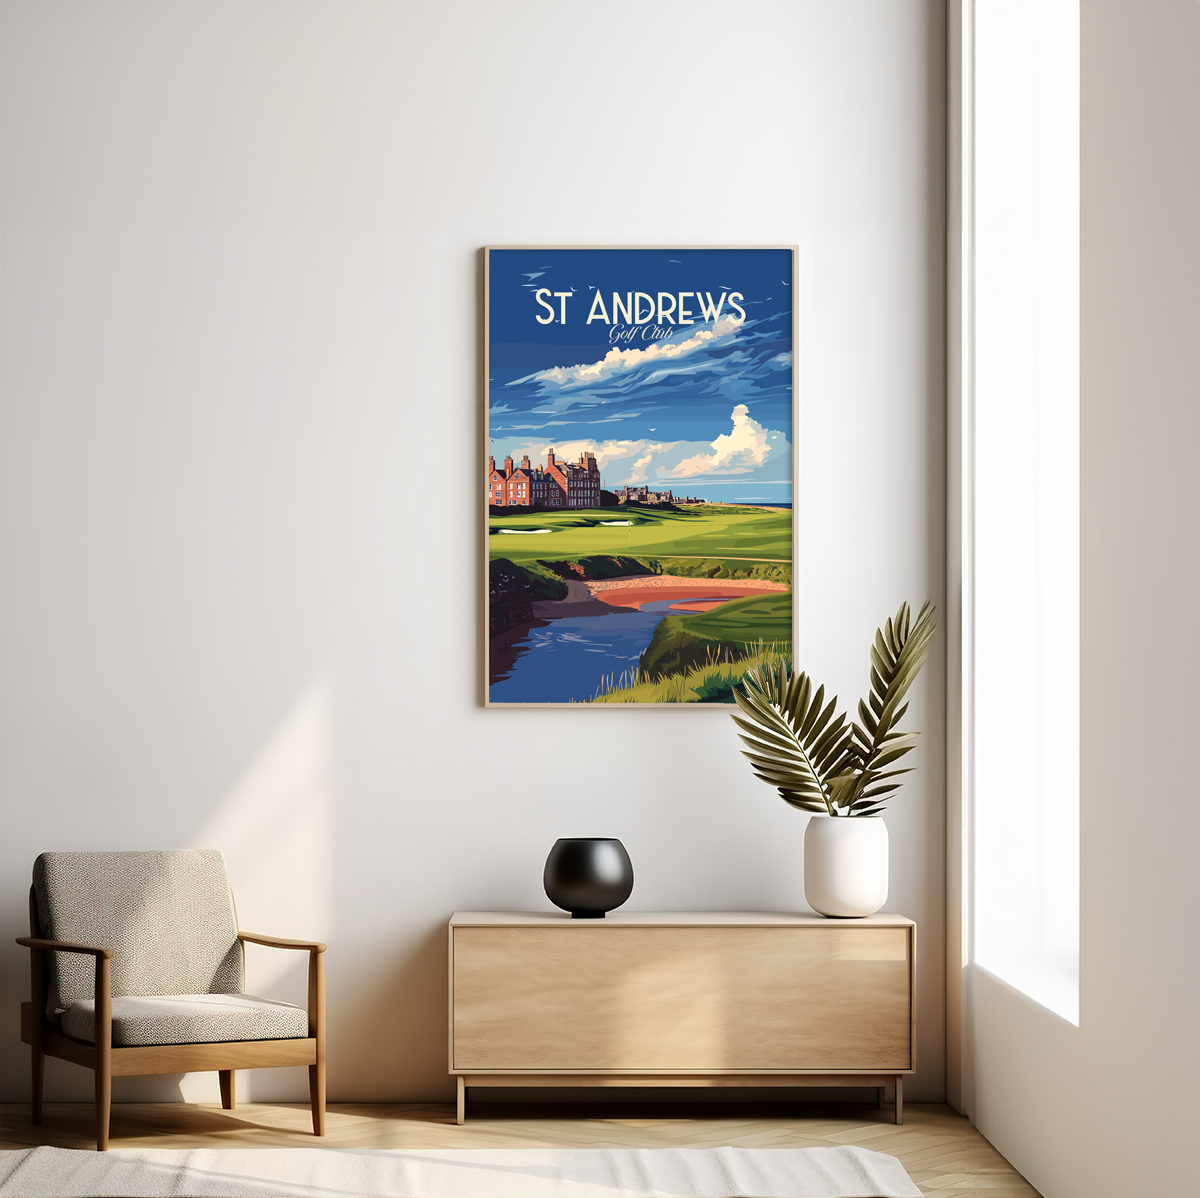 St Andrews poster by bon voyage design